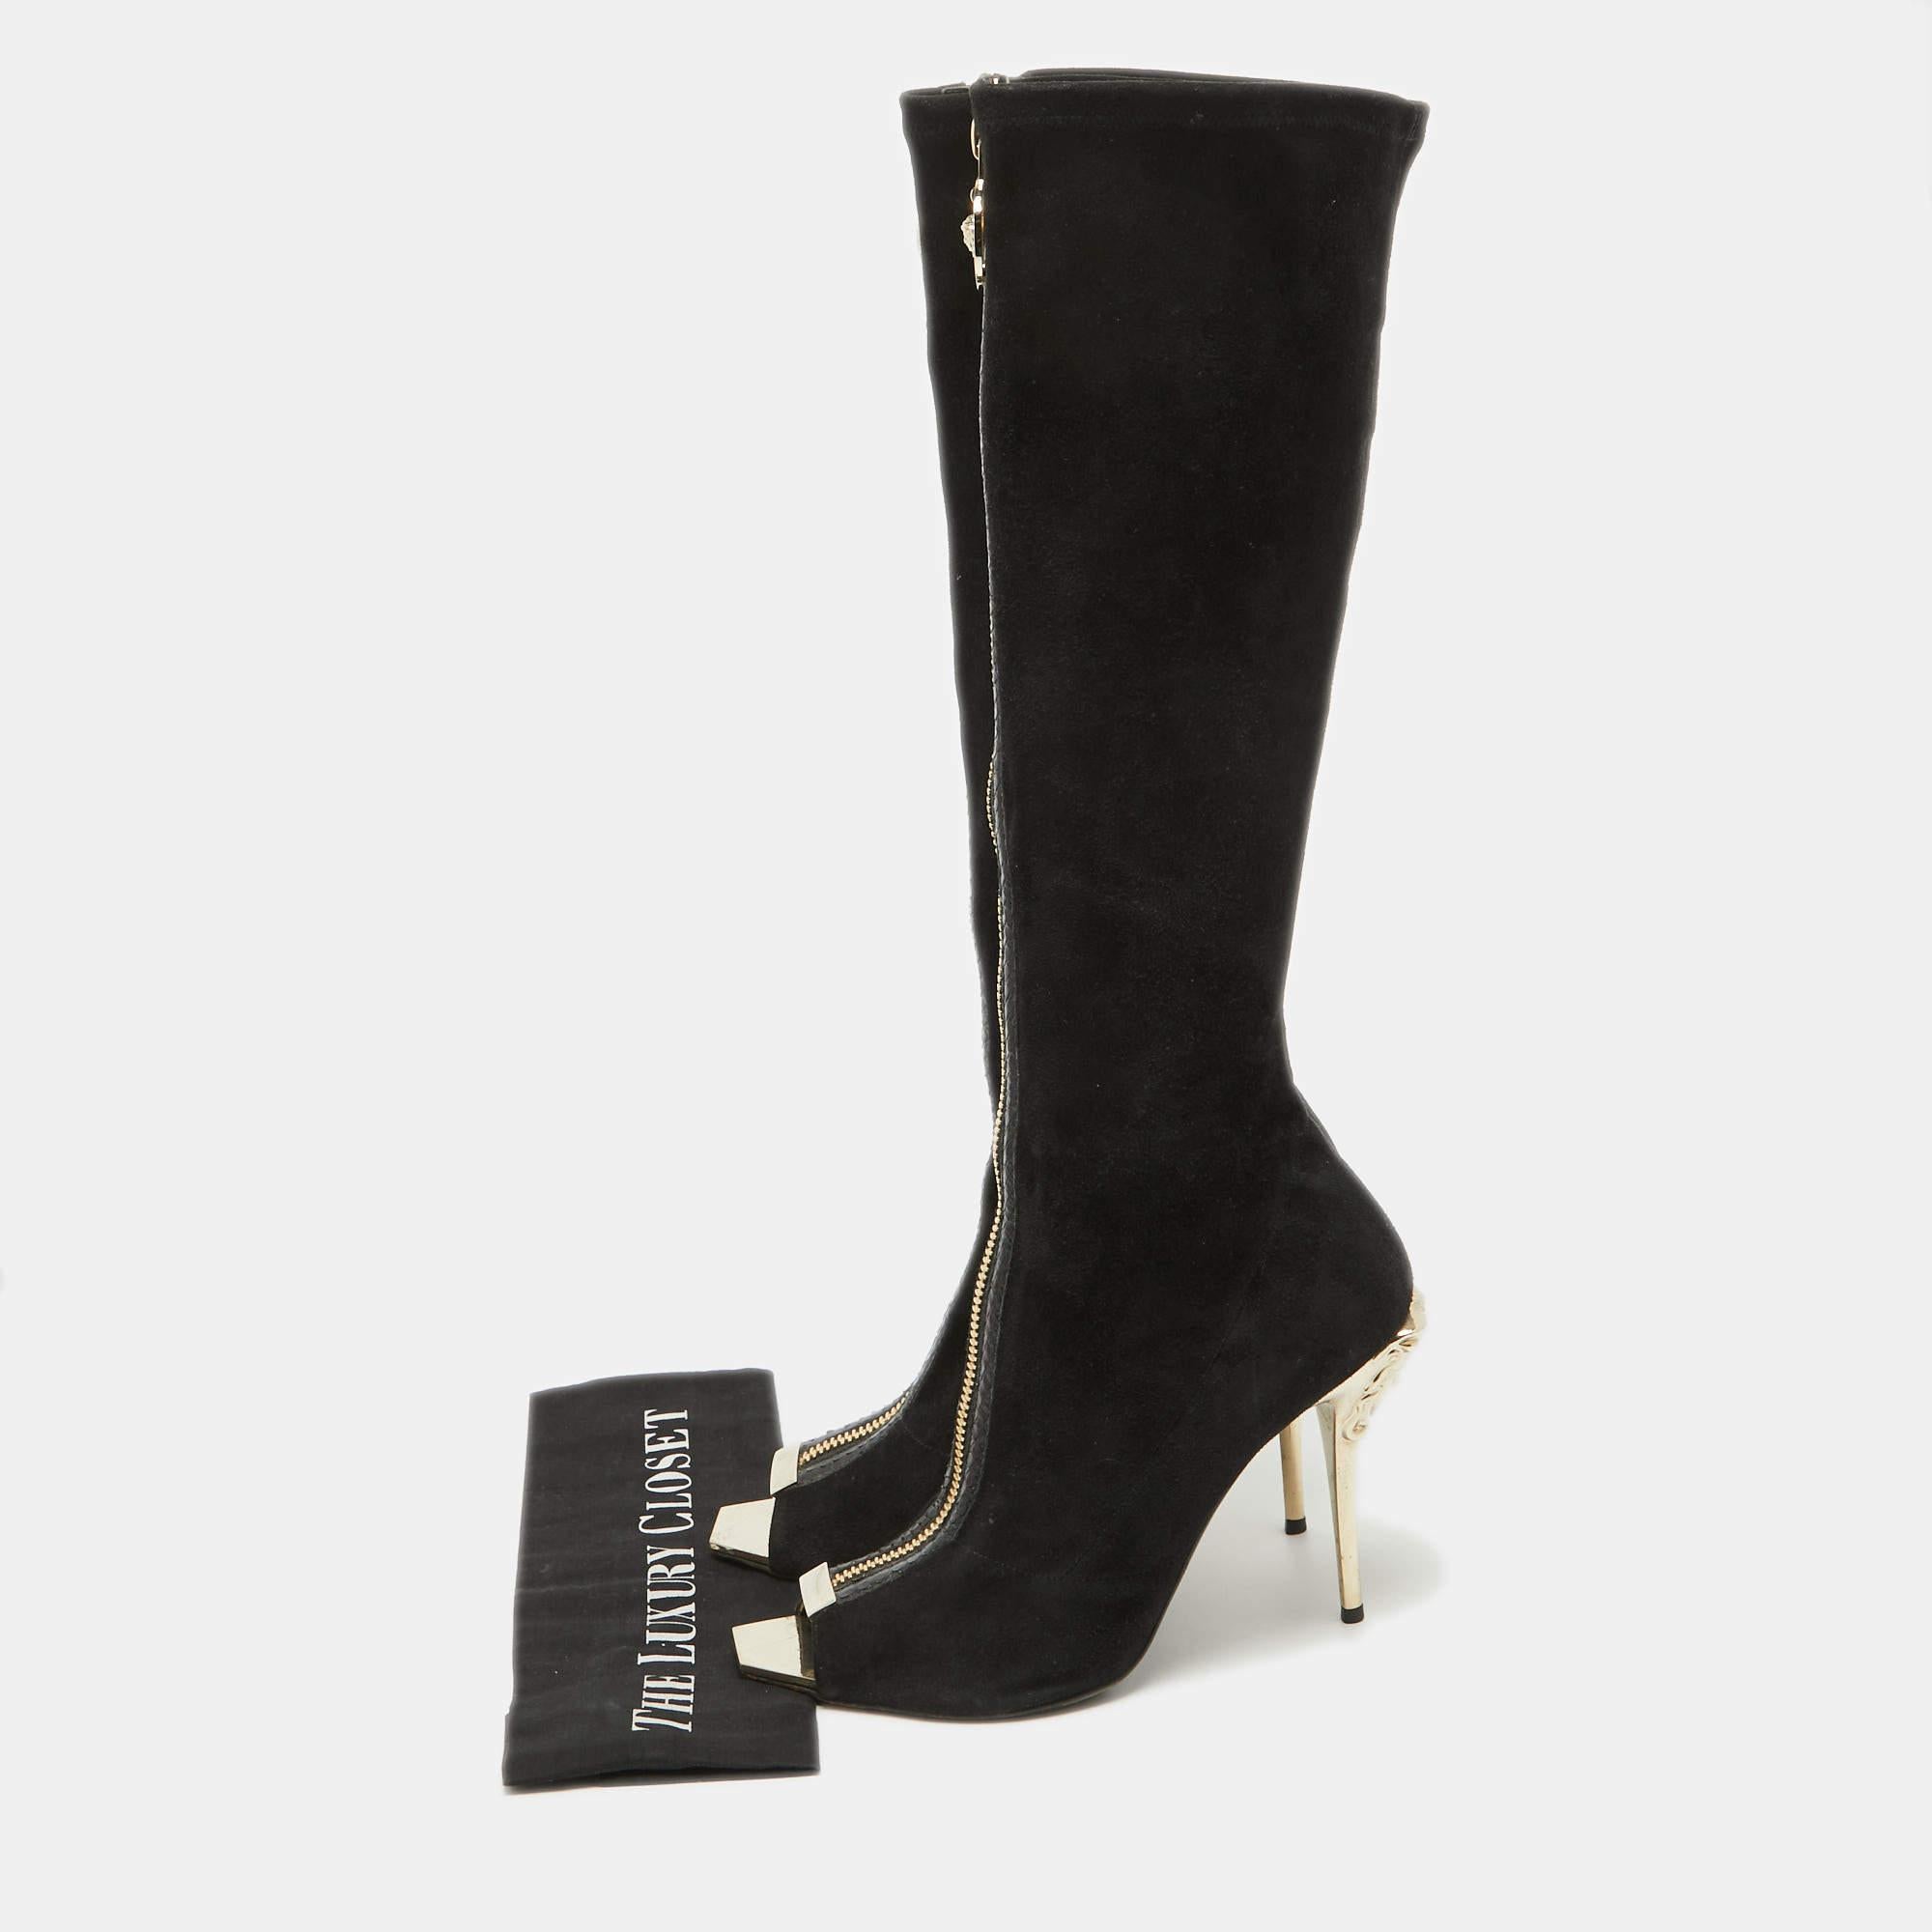 Versace Black Suede Open Toe Knee Length Boots Size 41 5